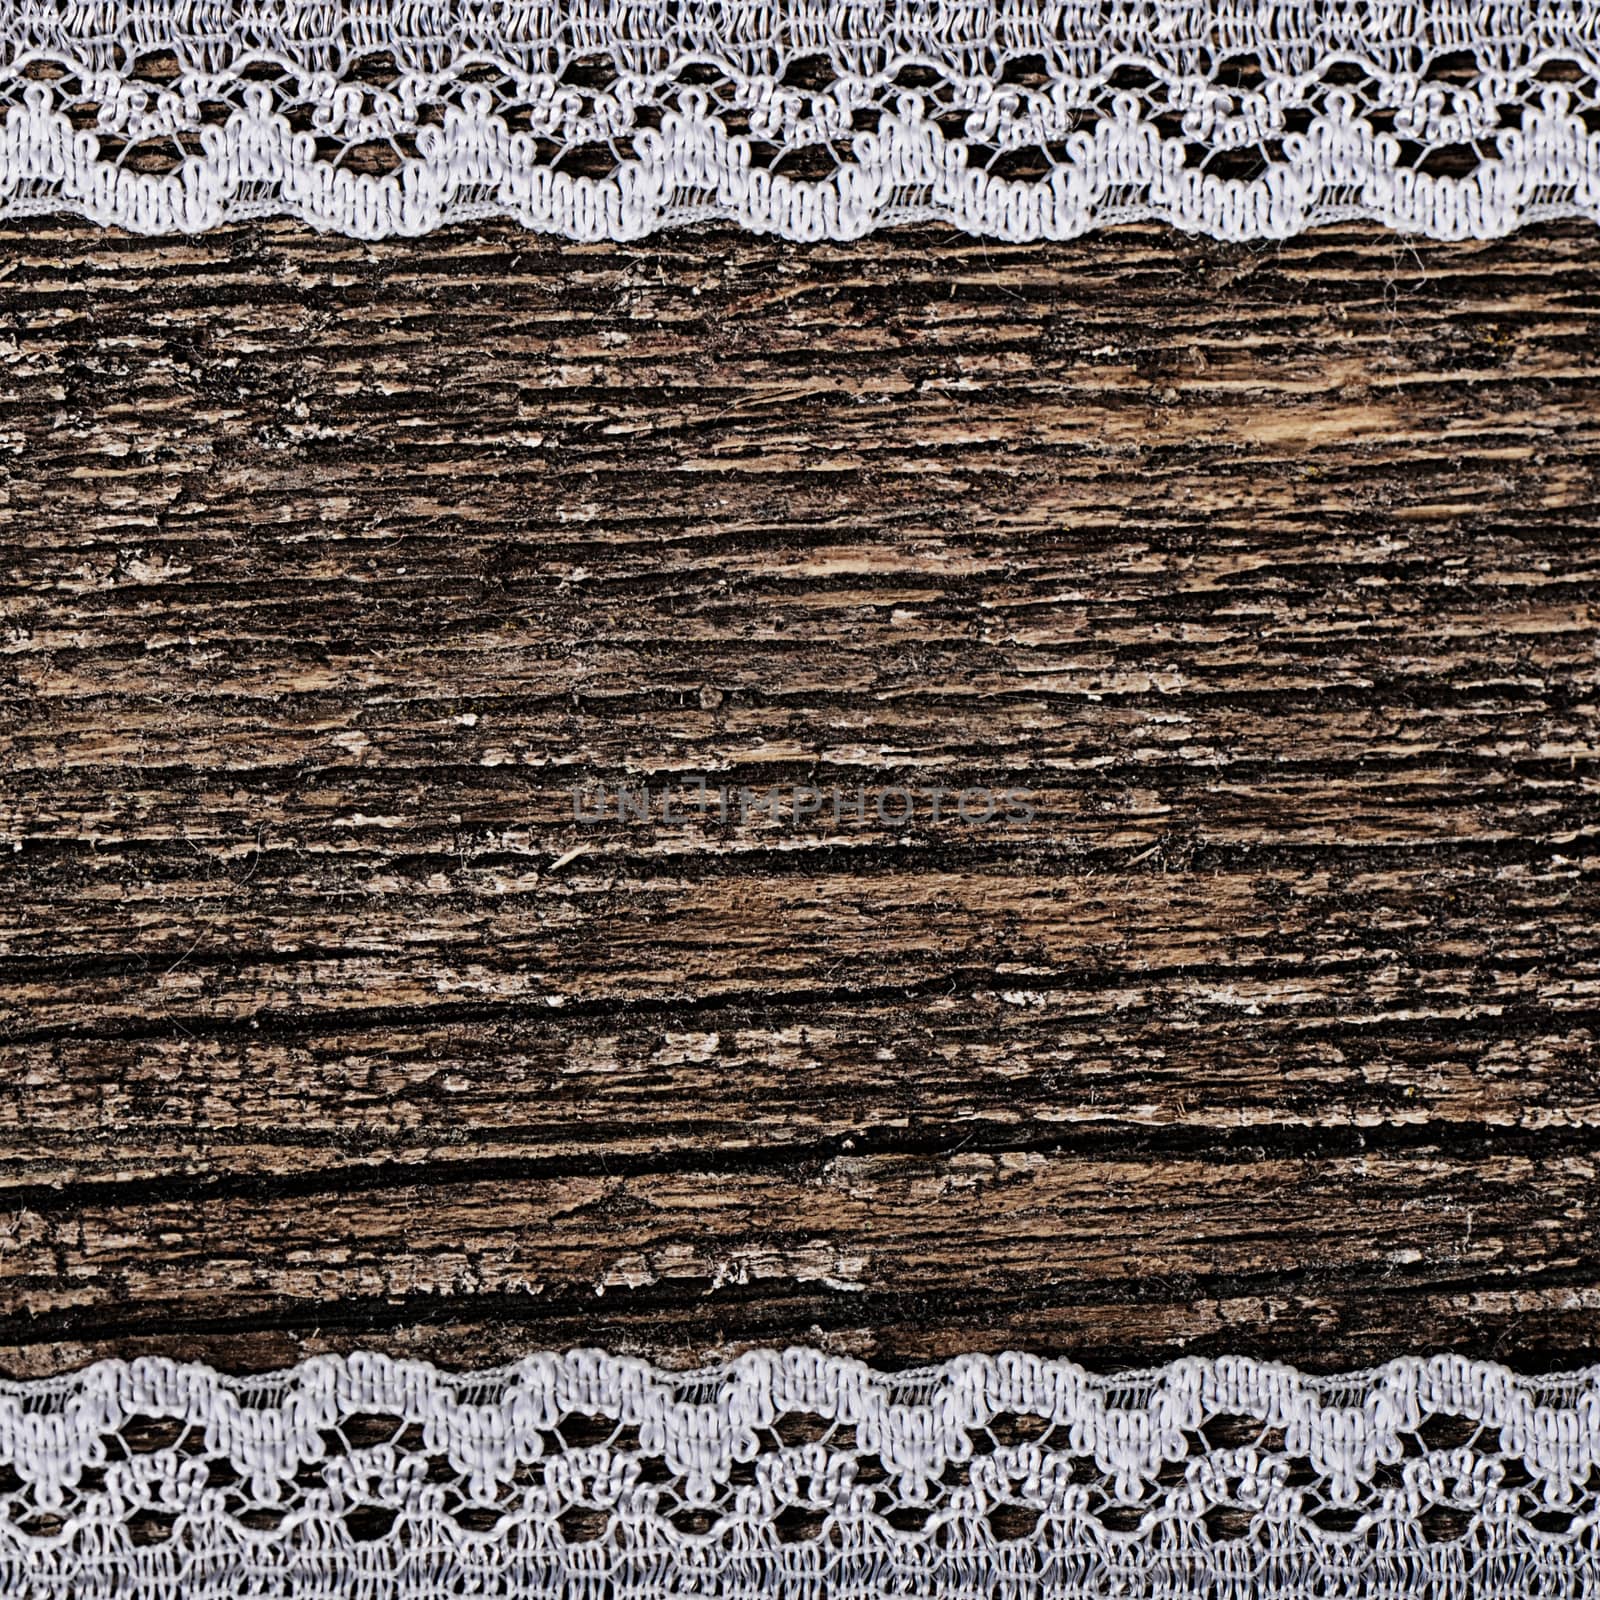 Openwork lace on wooden background by SvetaVo